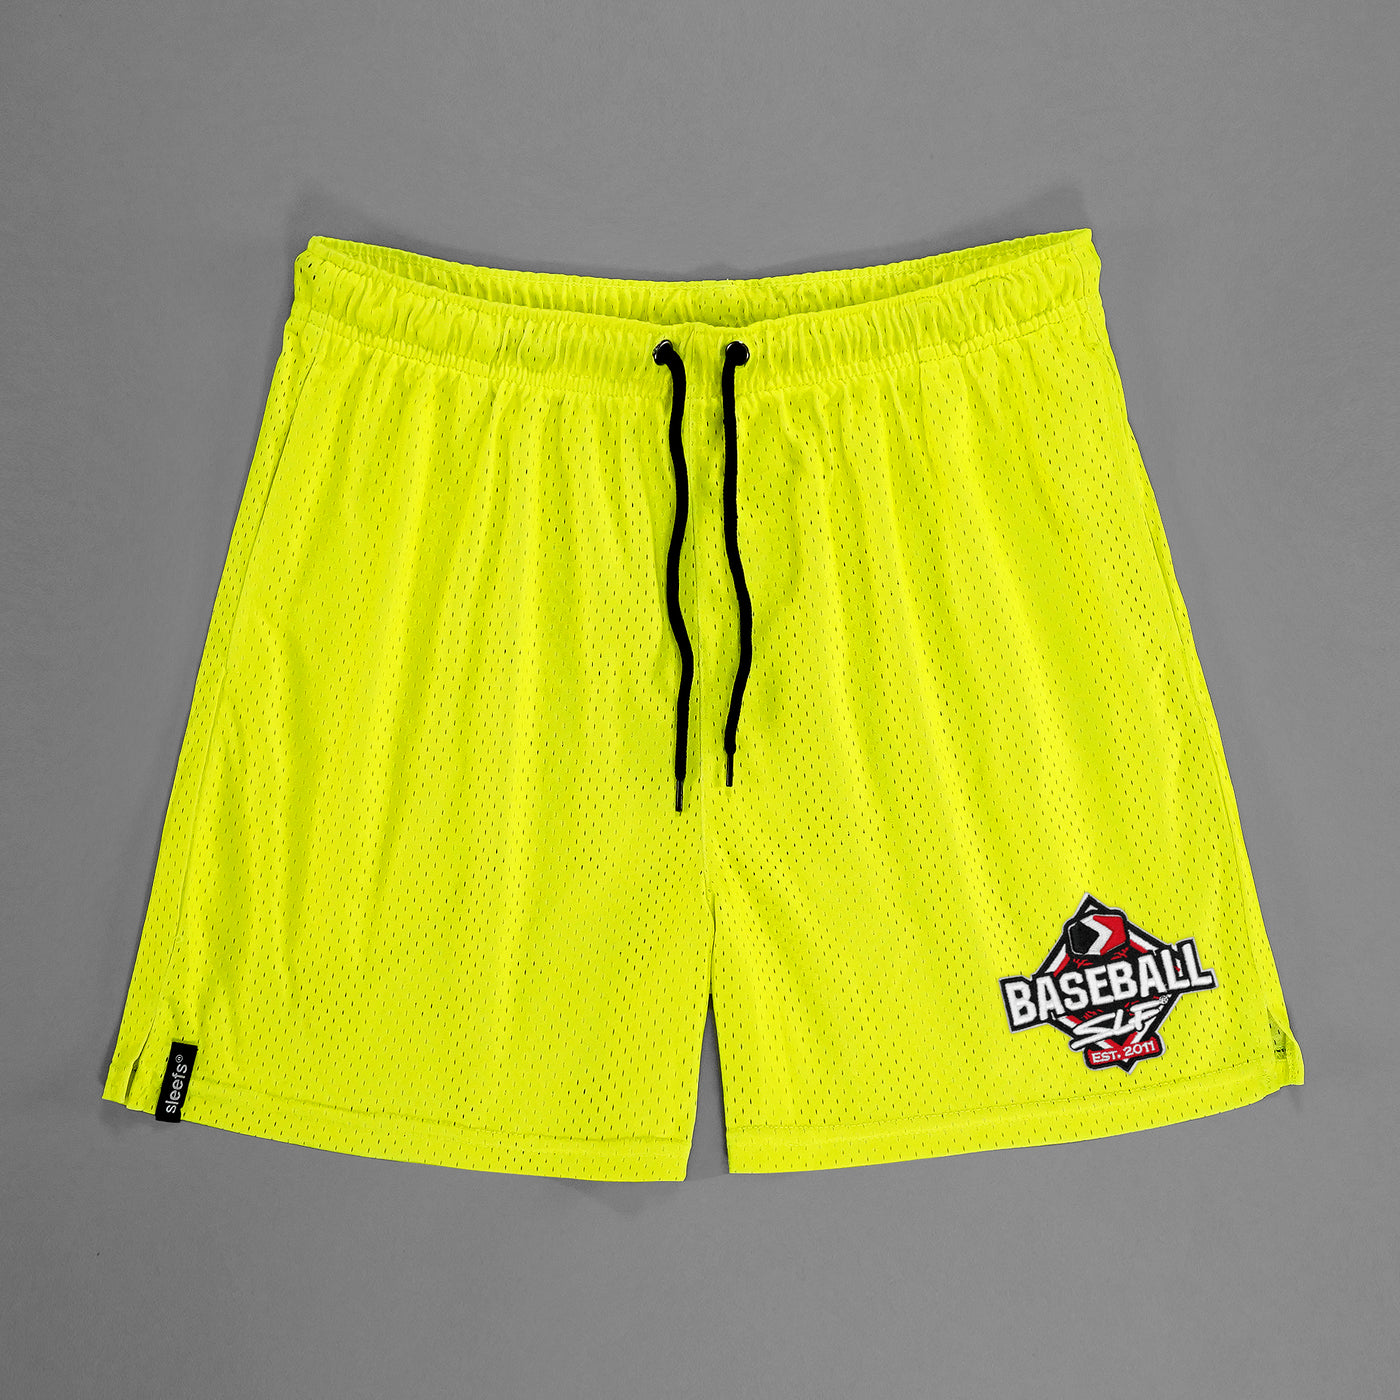 Baseball SLF Patch Shorts - 7"